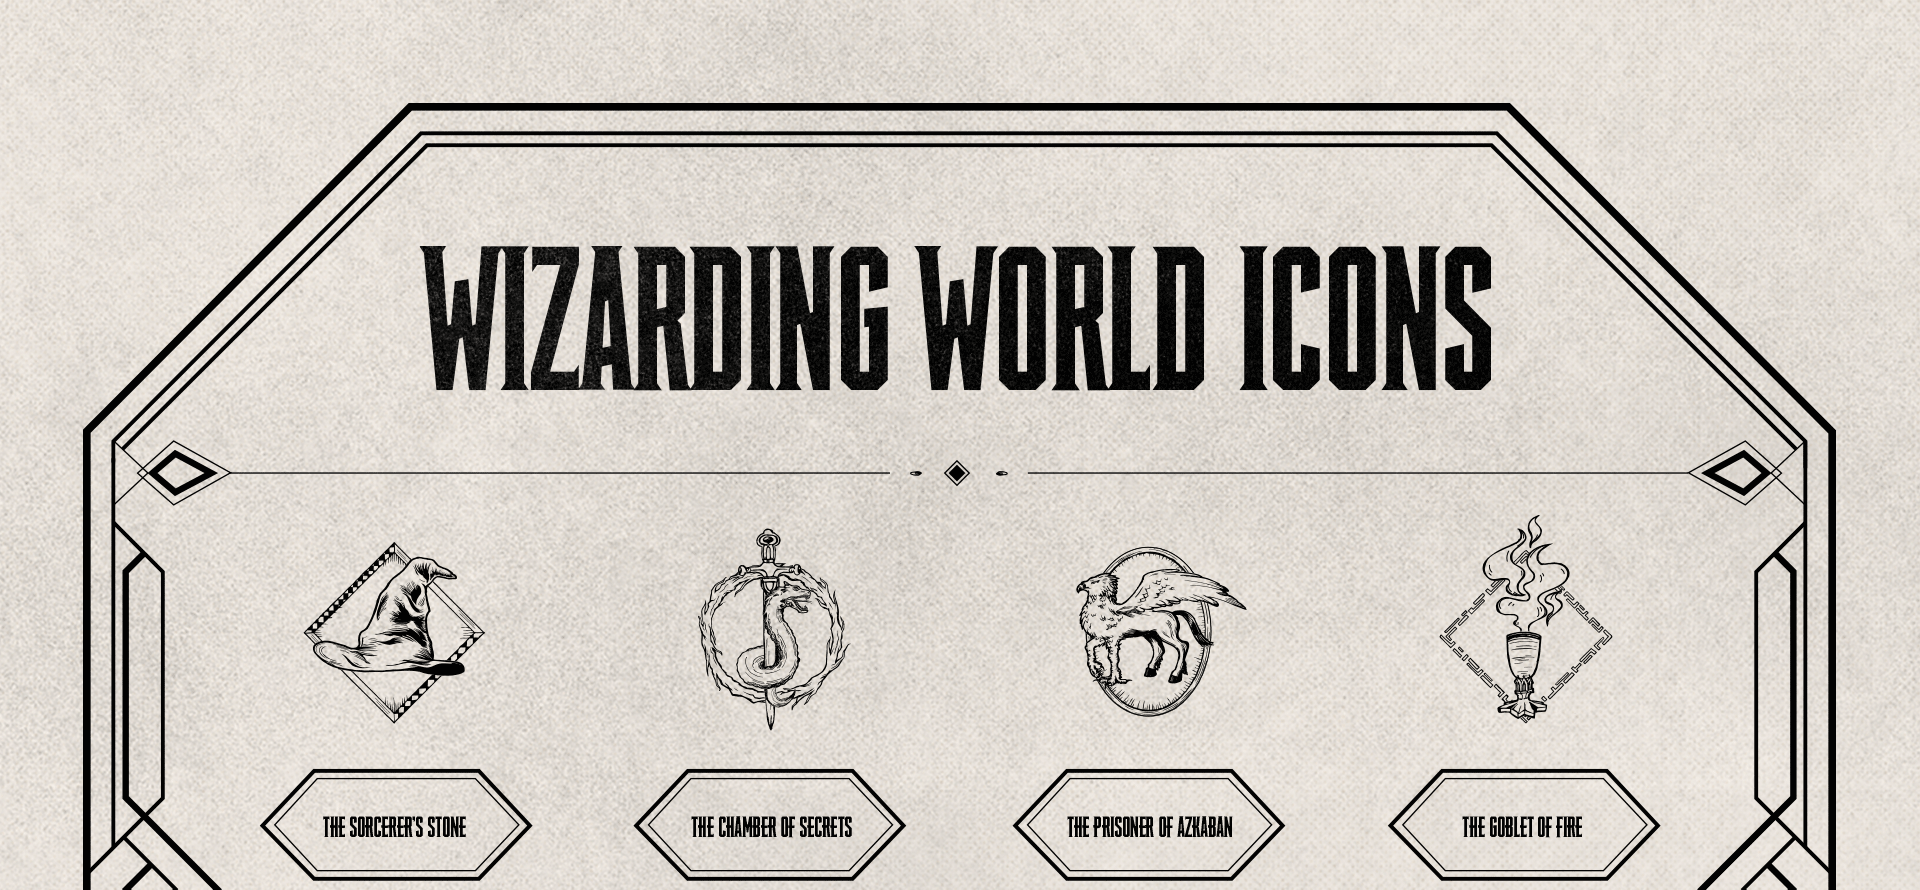 Wizarding World Logo - SYFY Wizarding World